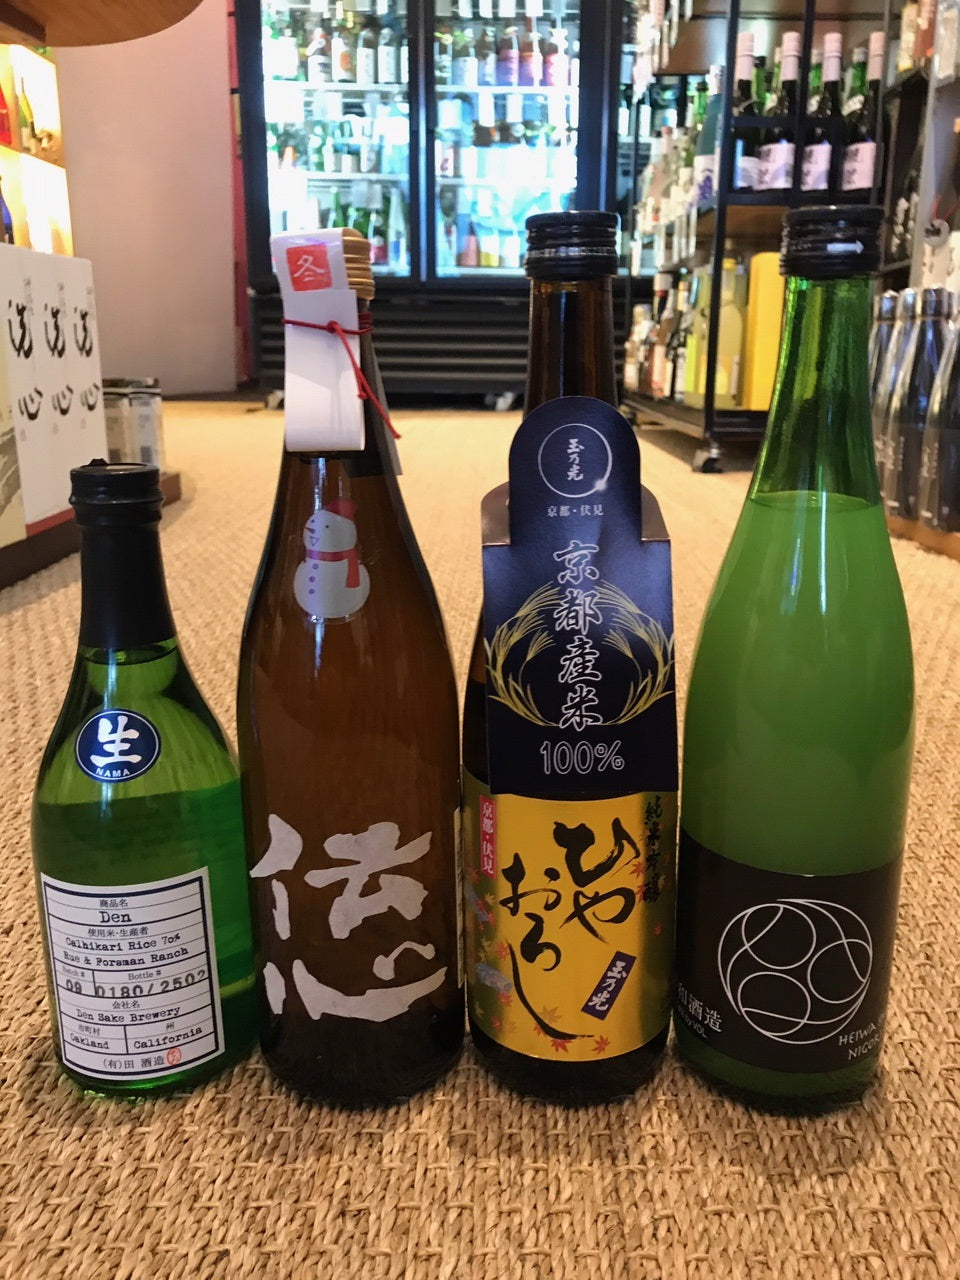 New Store Arrivals – Den#9, Denshin, Tamanohikari, and Heiwa